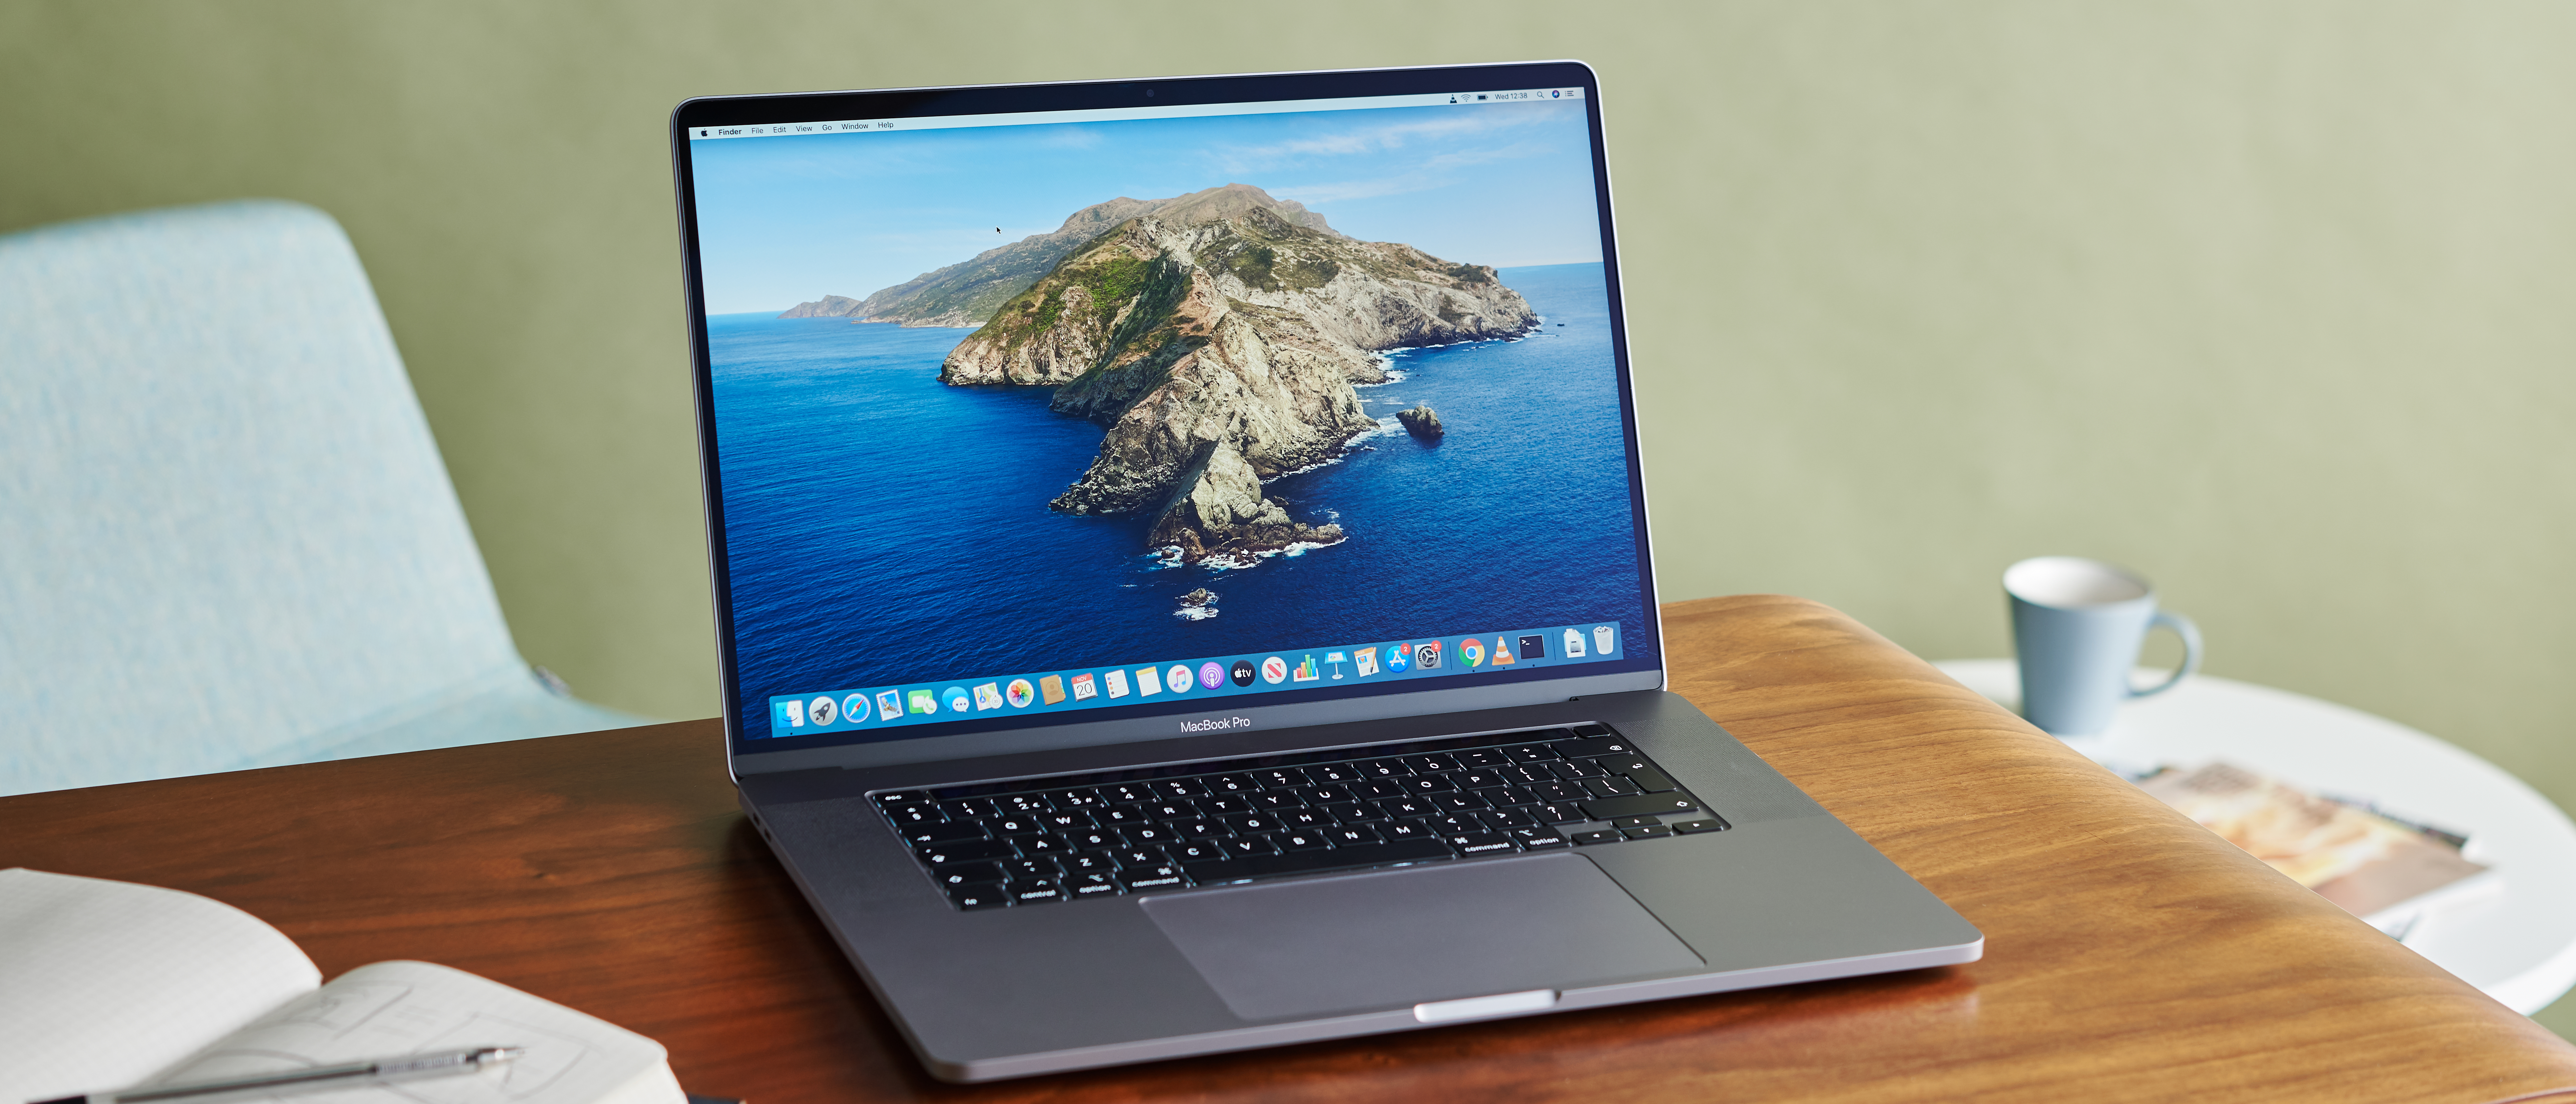 Mac i7 laptop